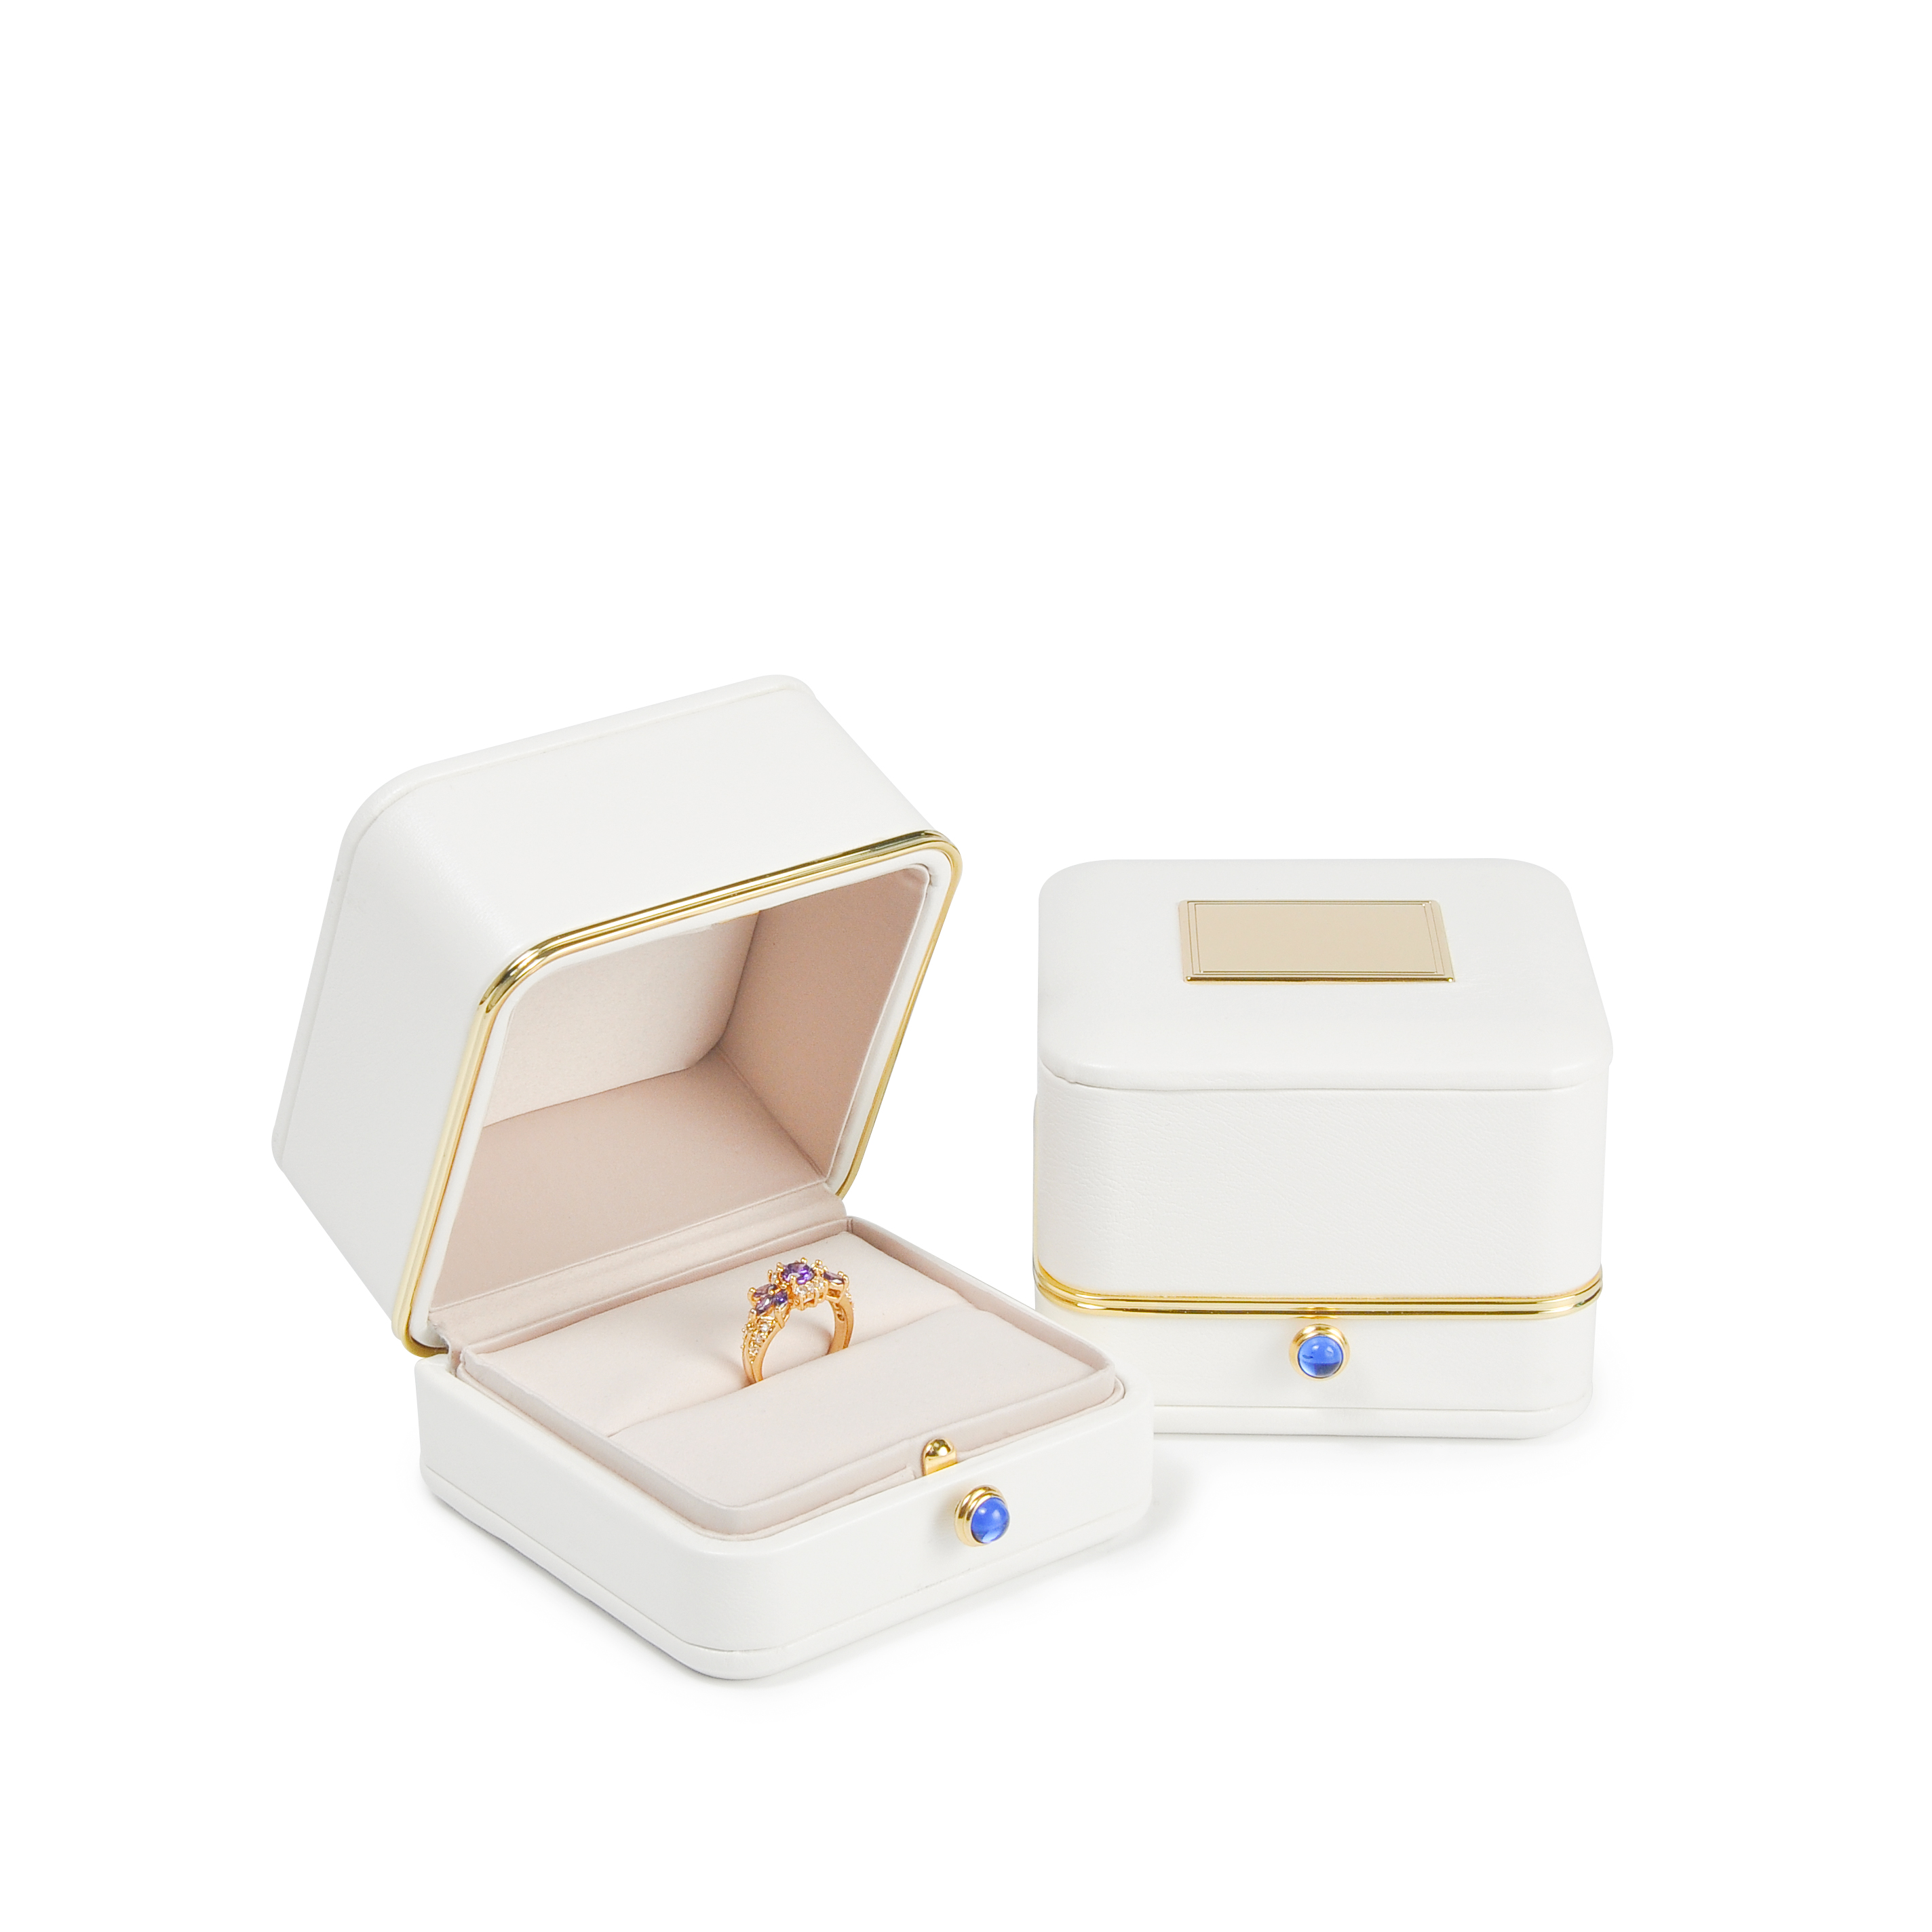 Moda branca caixa de plástico borda de ouro botão anel jóias caixa proposta caixa de anel